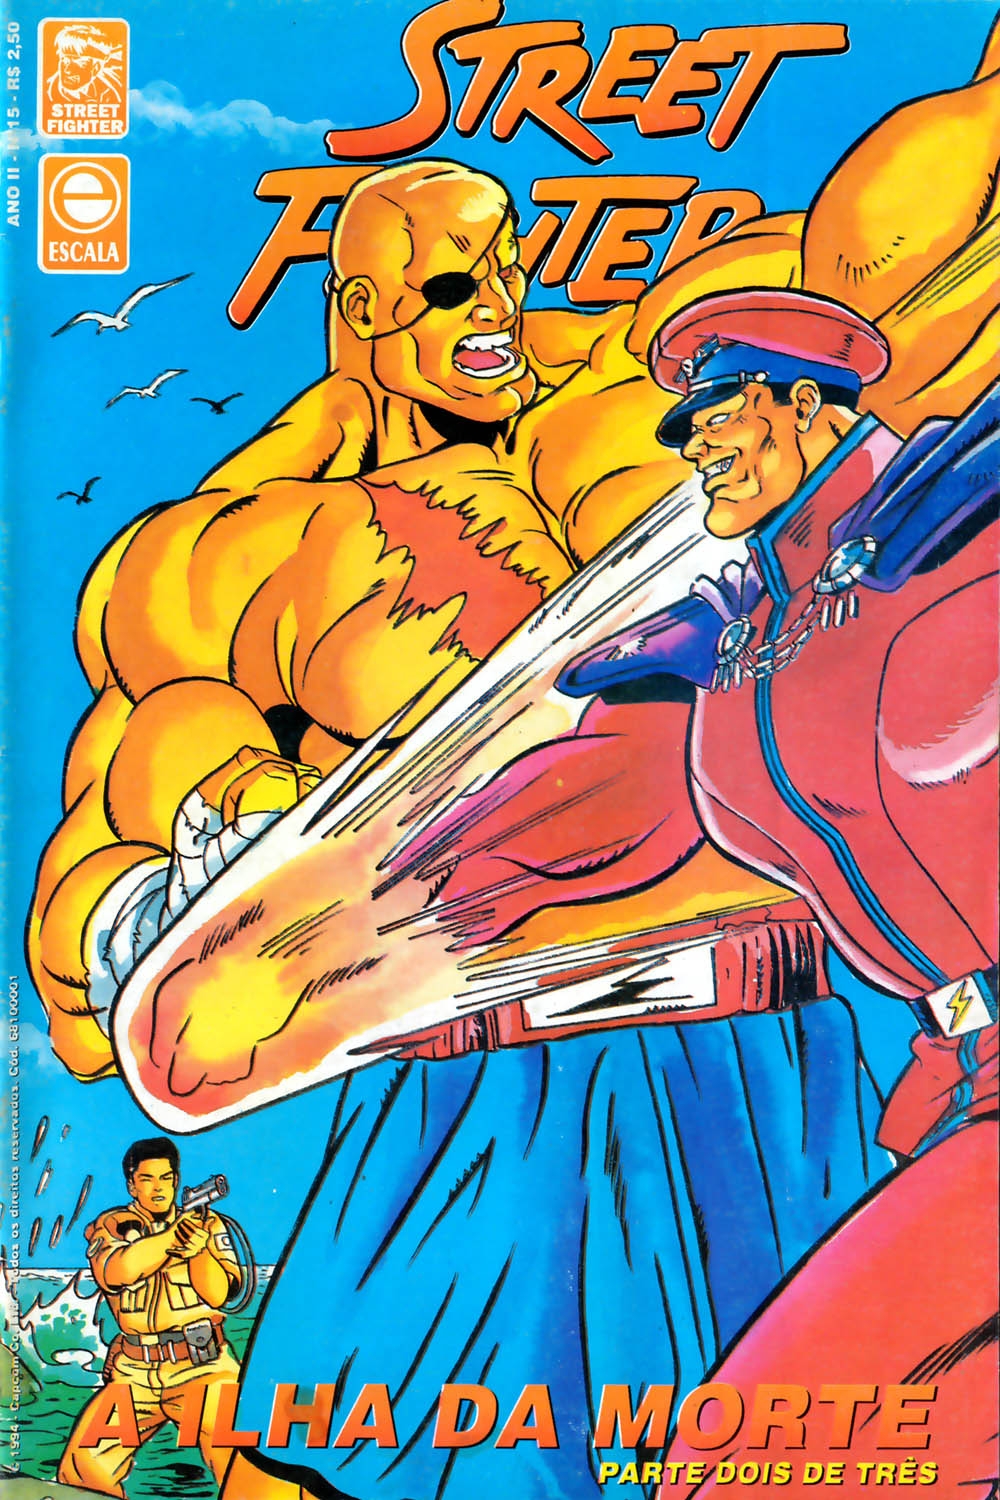 Street Fighter Brazilian comic PT-BR 15 0